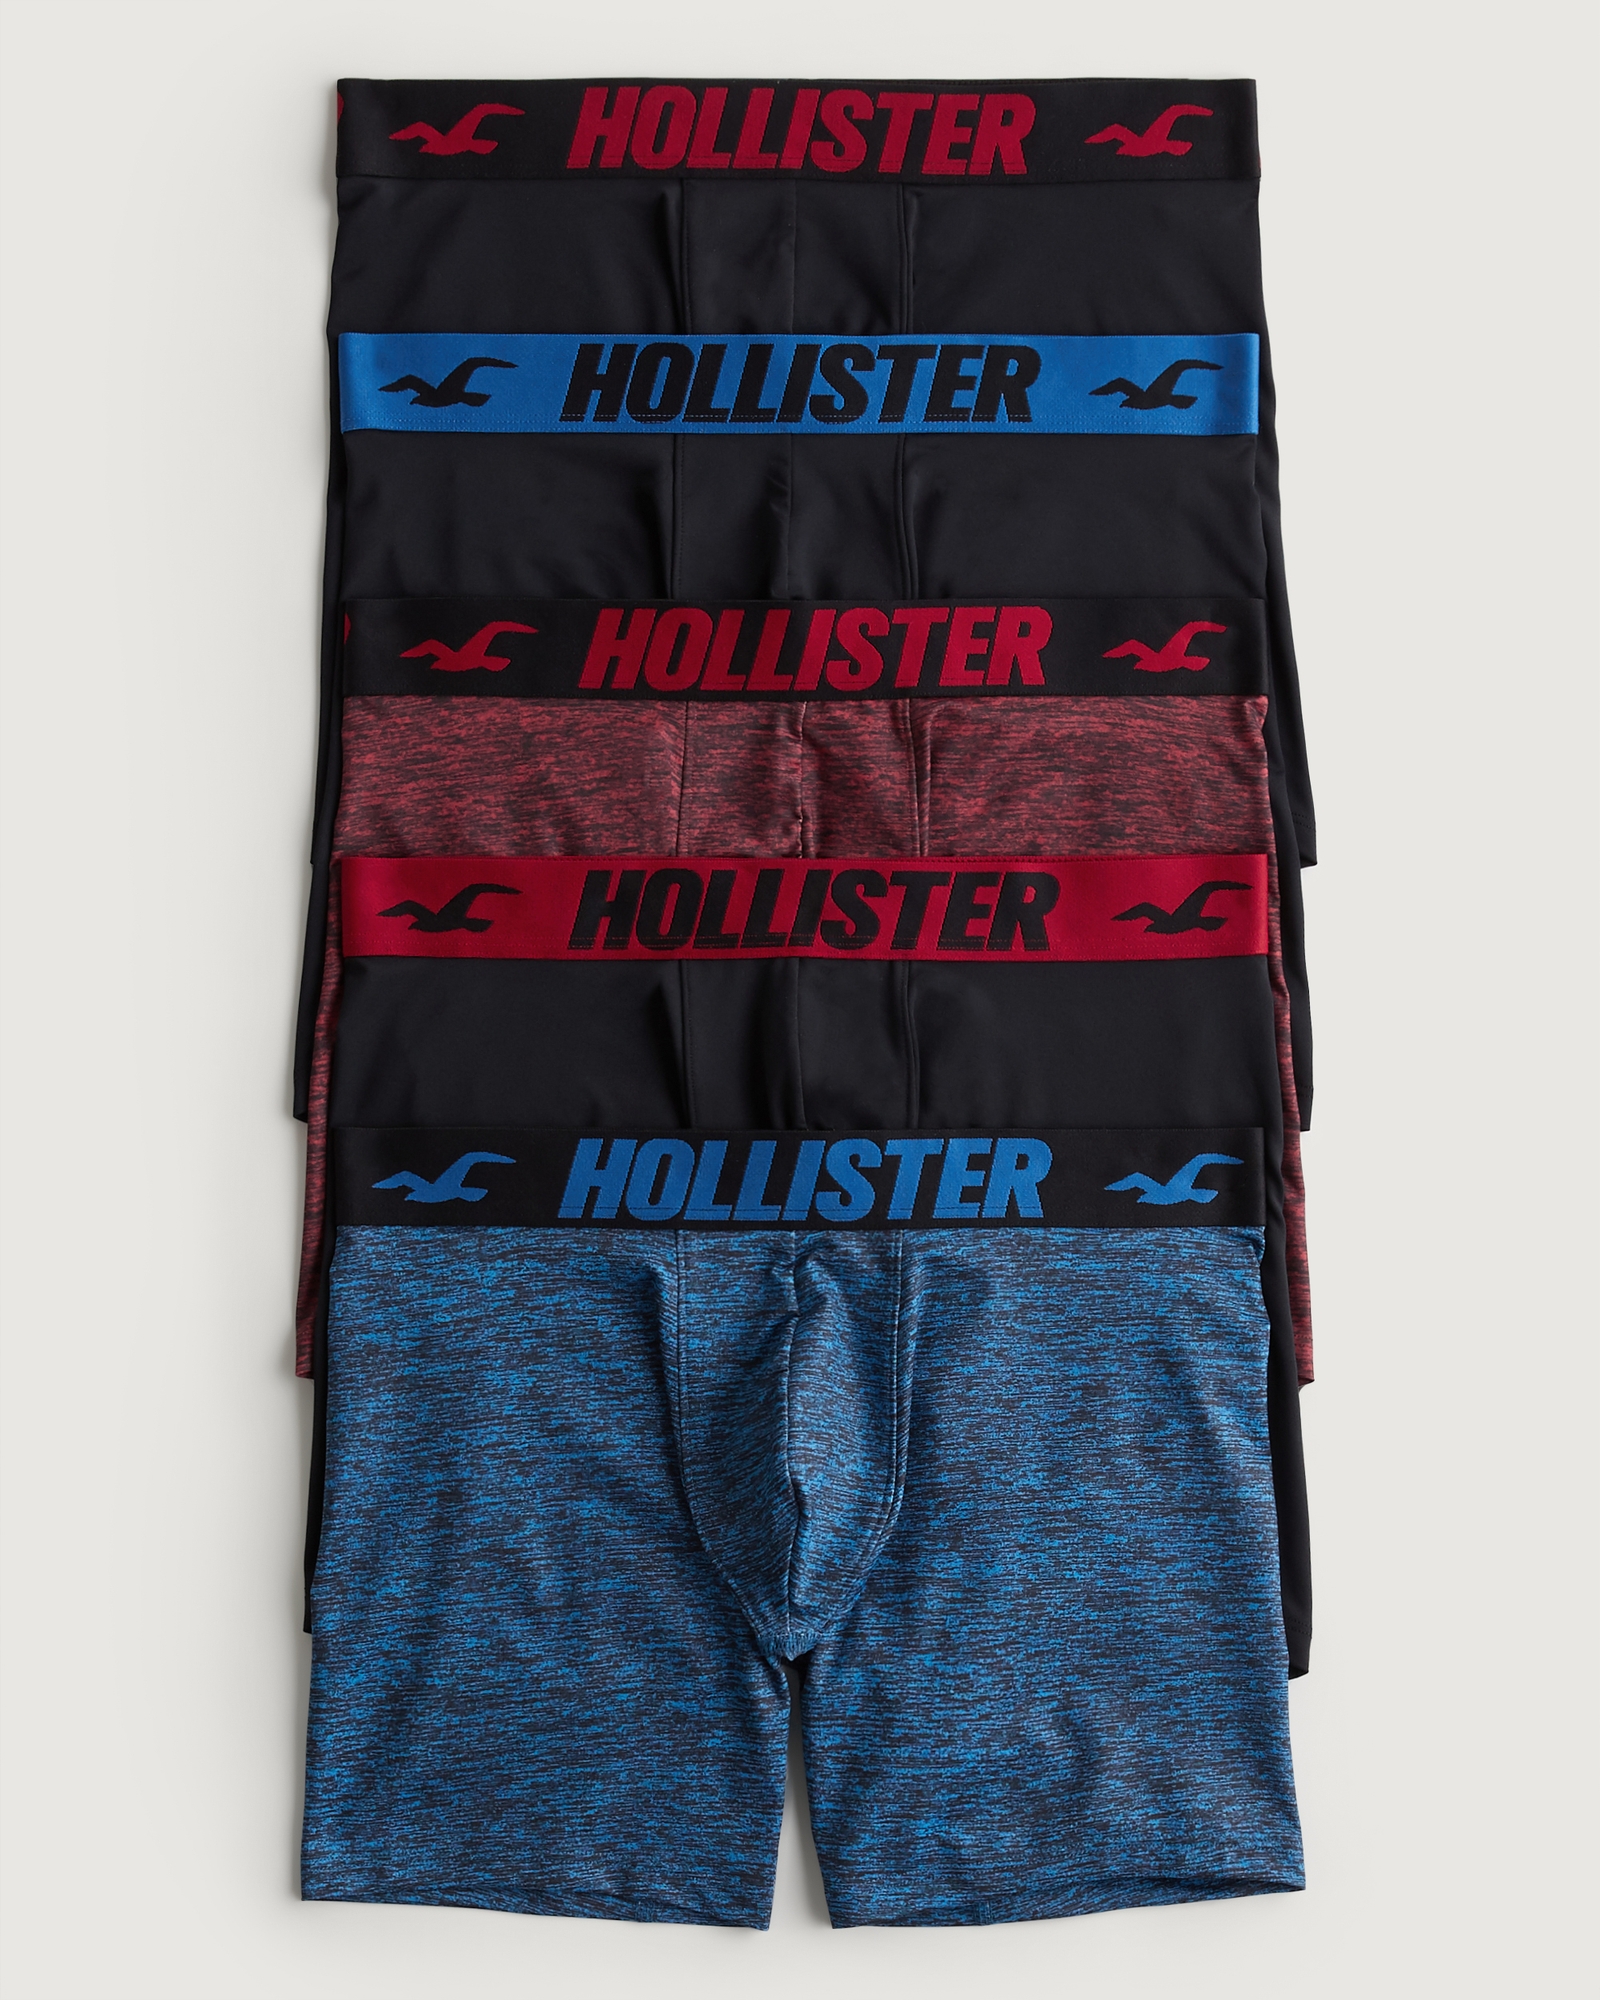 Hollister Underwear Clearance Shop Clearance